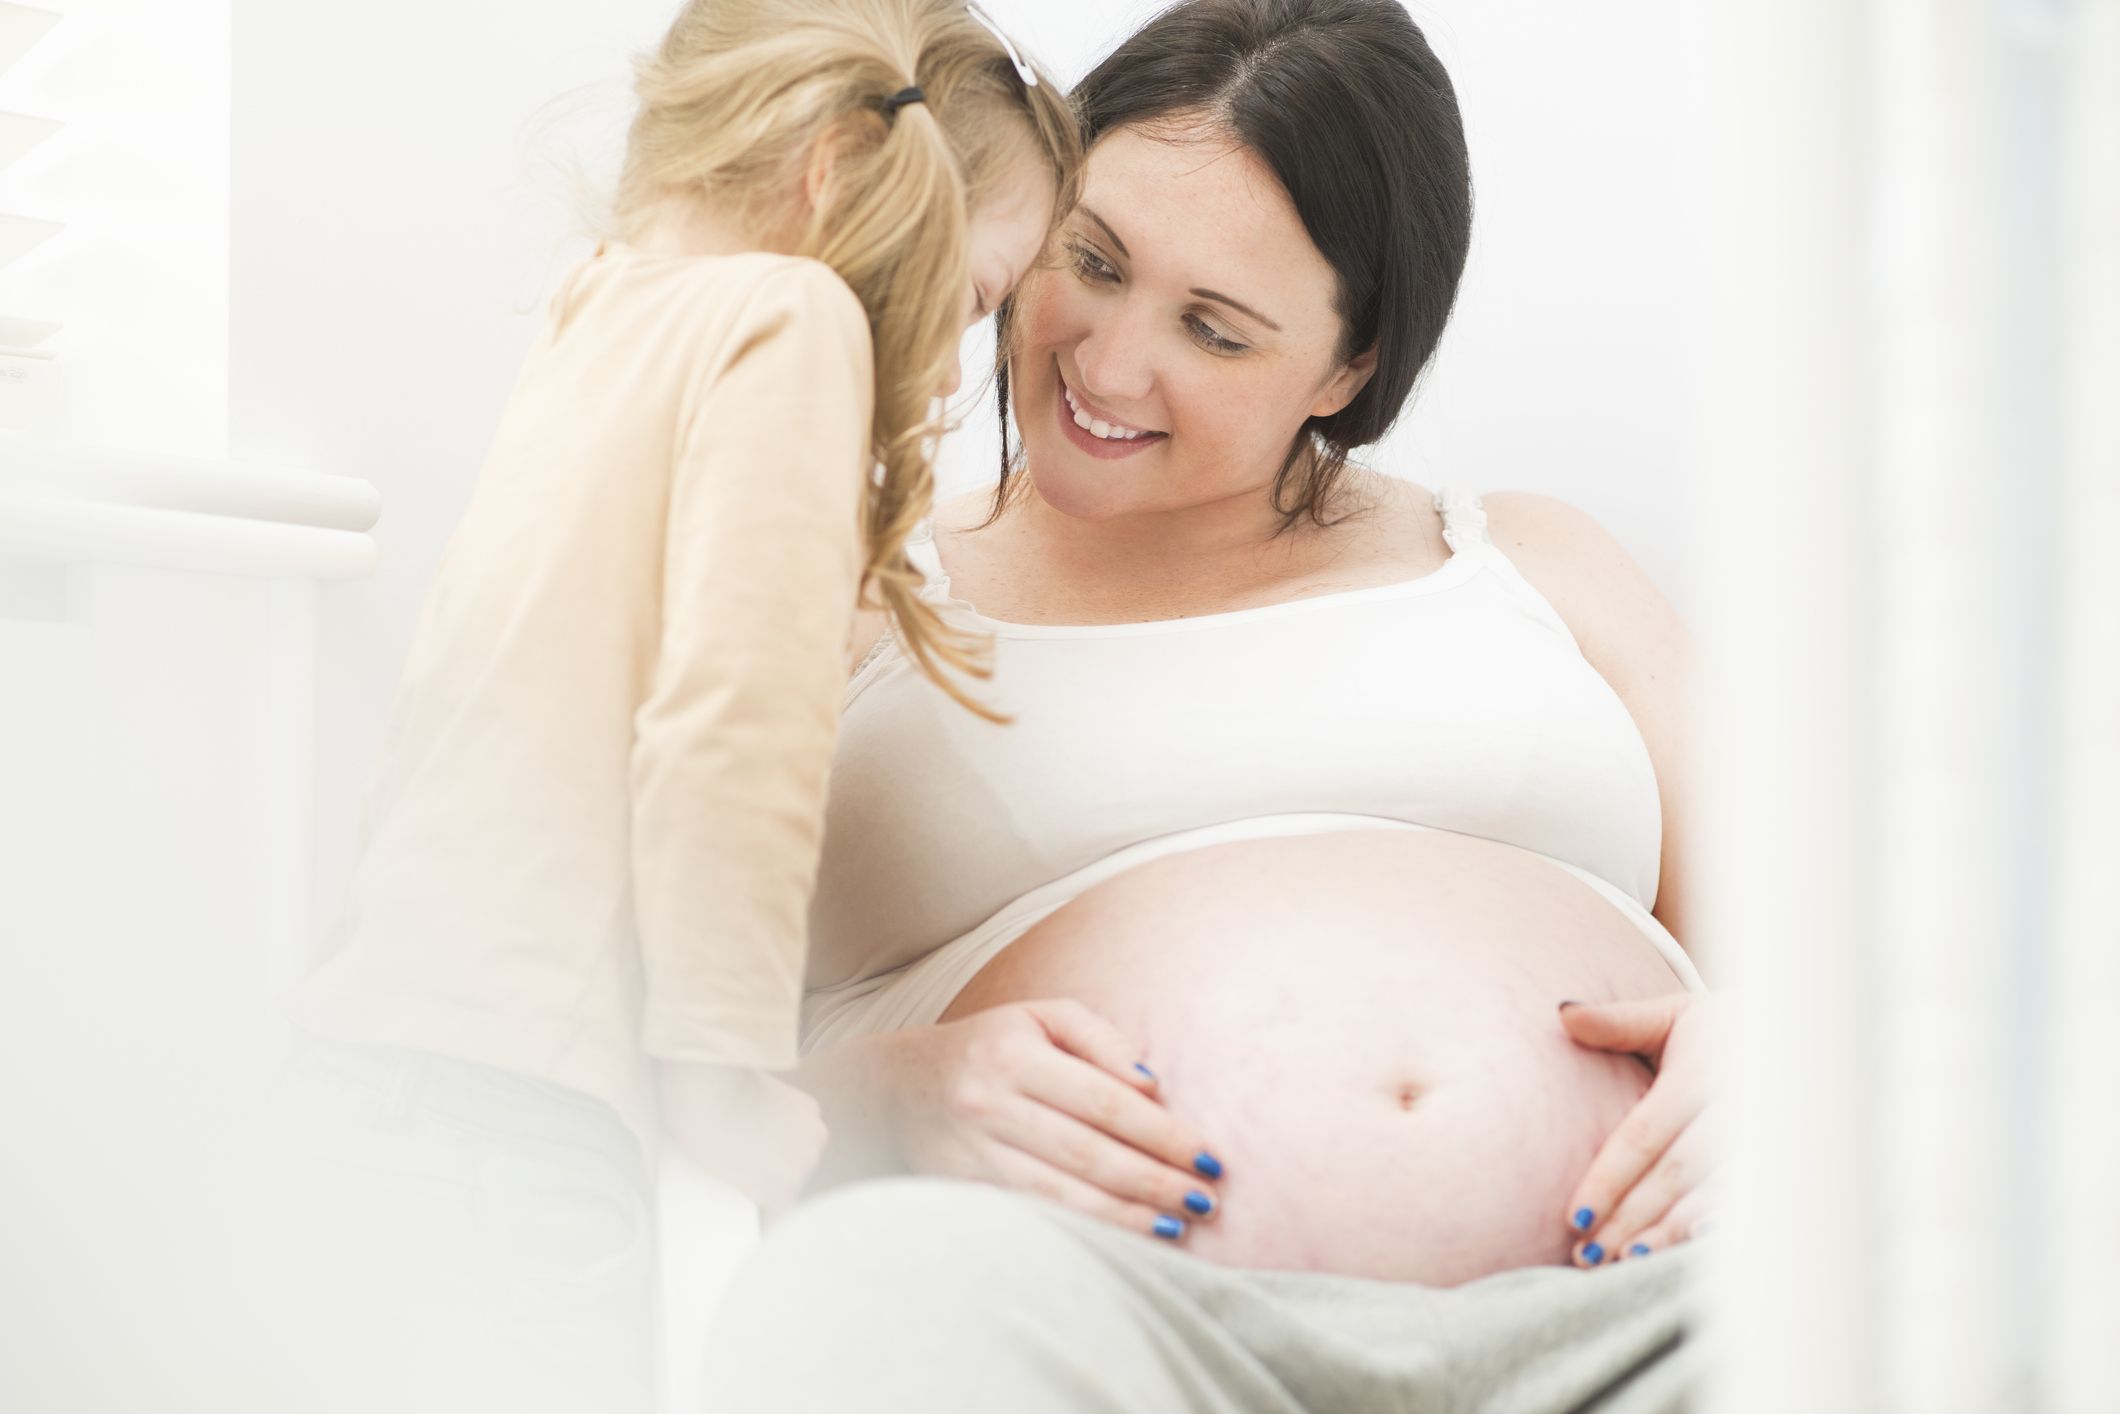 9 Tips to Achieve Stunning Maternity Photos